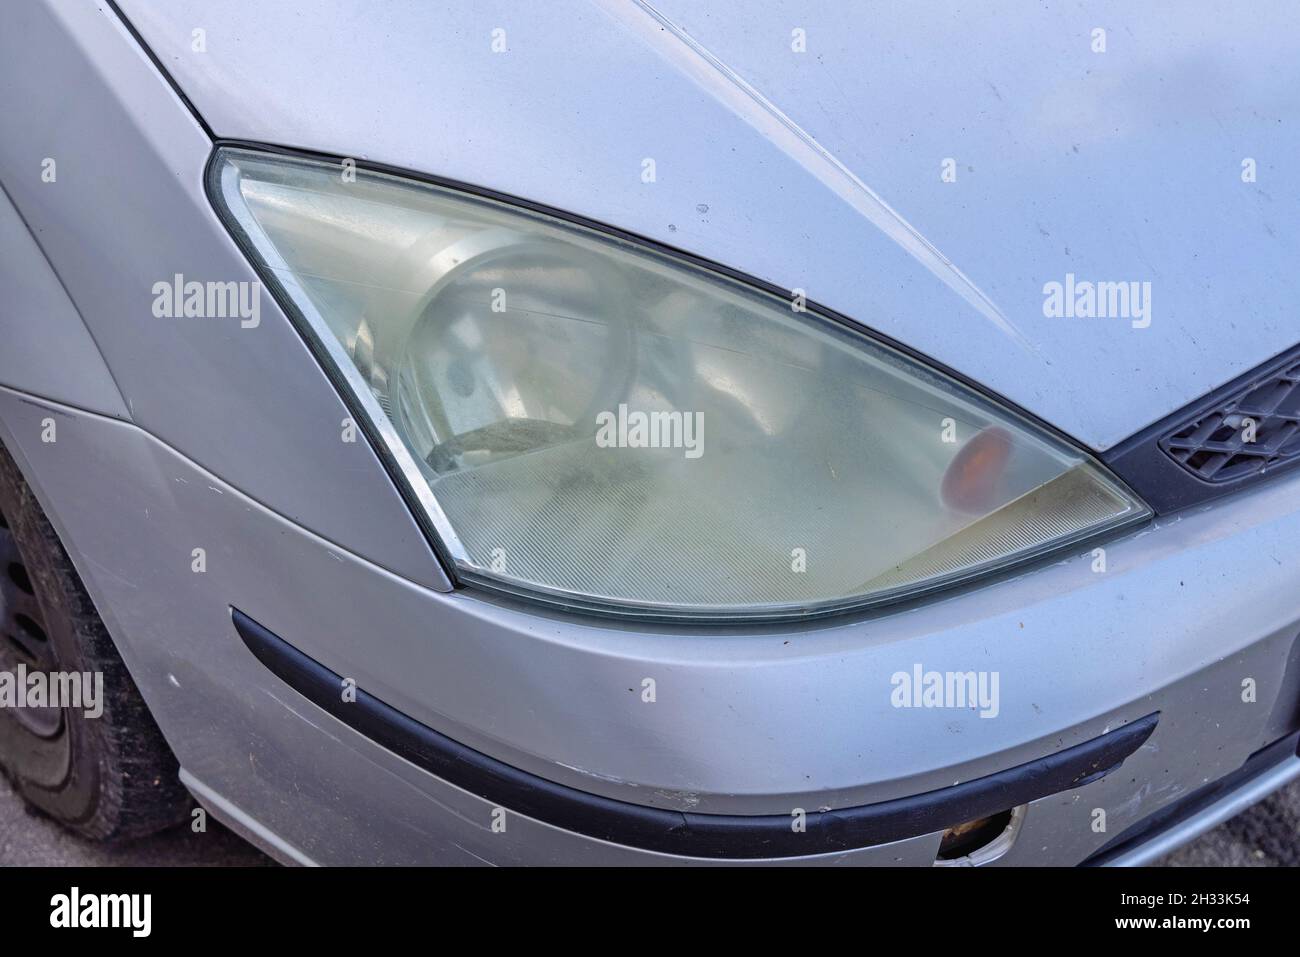 https://c8.alamy.com/comp/2H33K54/foggy-headlights-plastic-cover-at-old-car-front-2H33K54.jpg